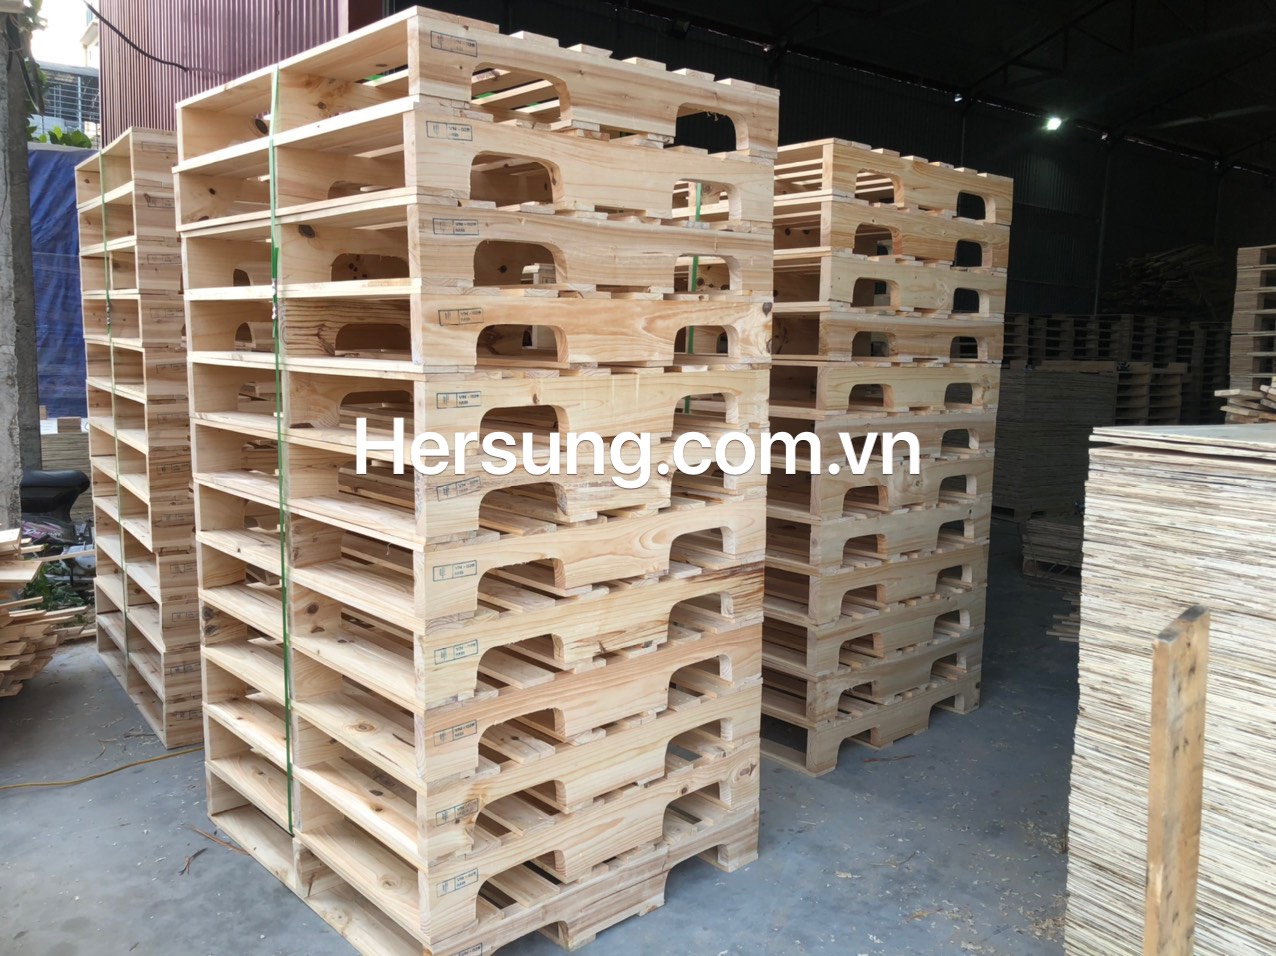 Pallet gỗ - Pallet Gỗ HerSung Việt Nam - Công Ty TNHH HerSung Việt Nam